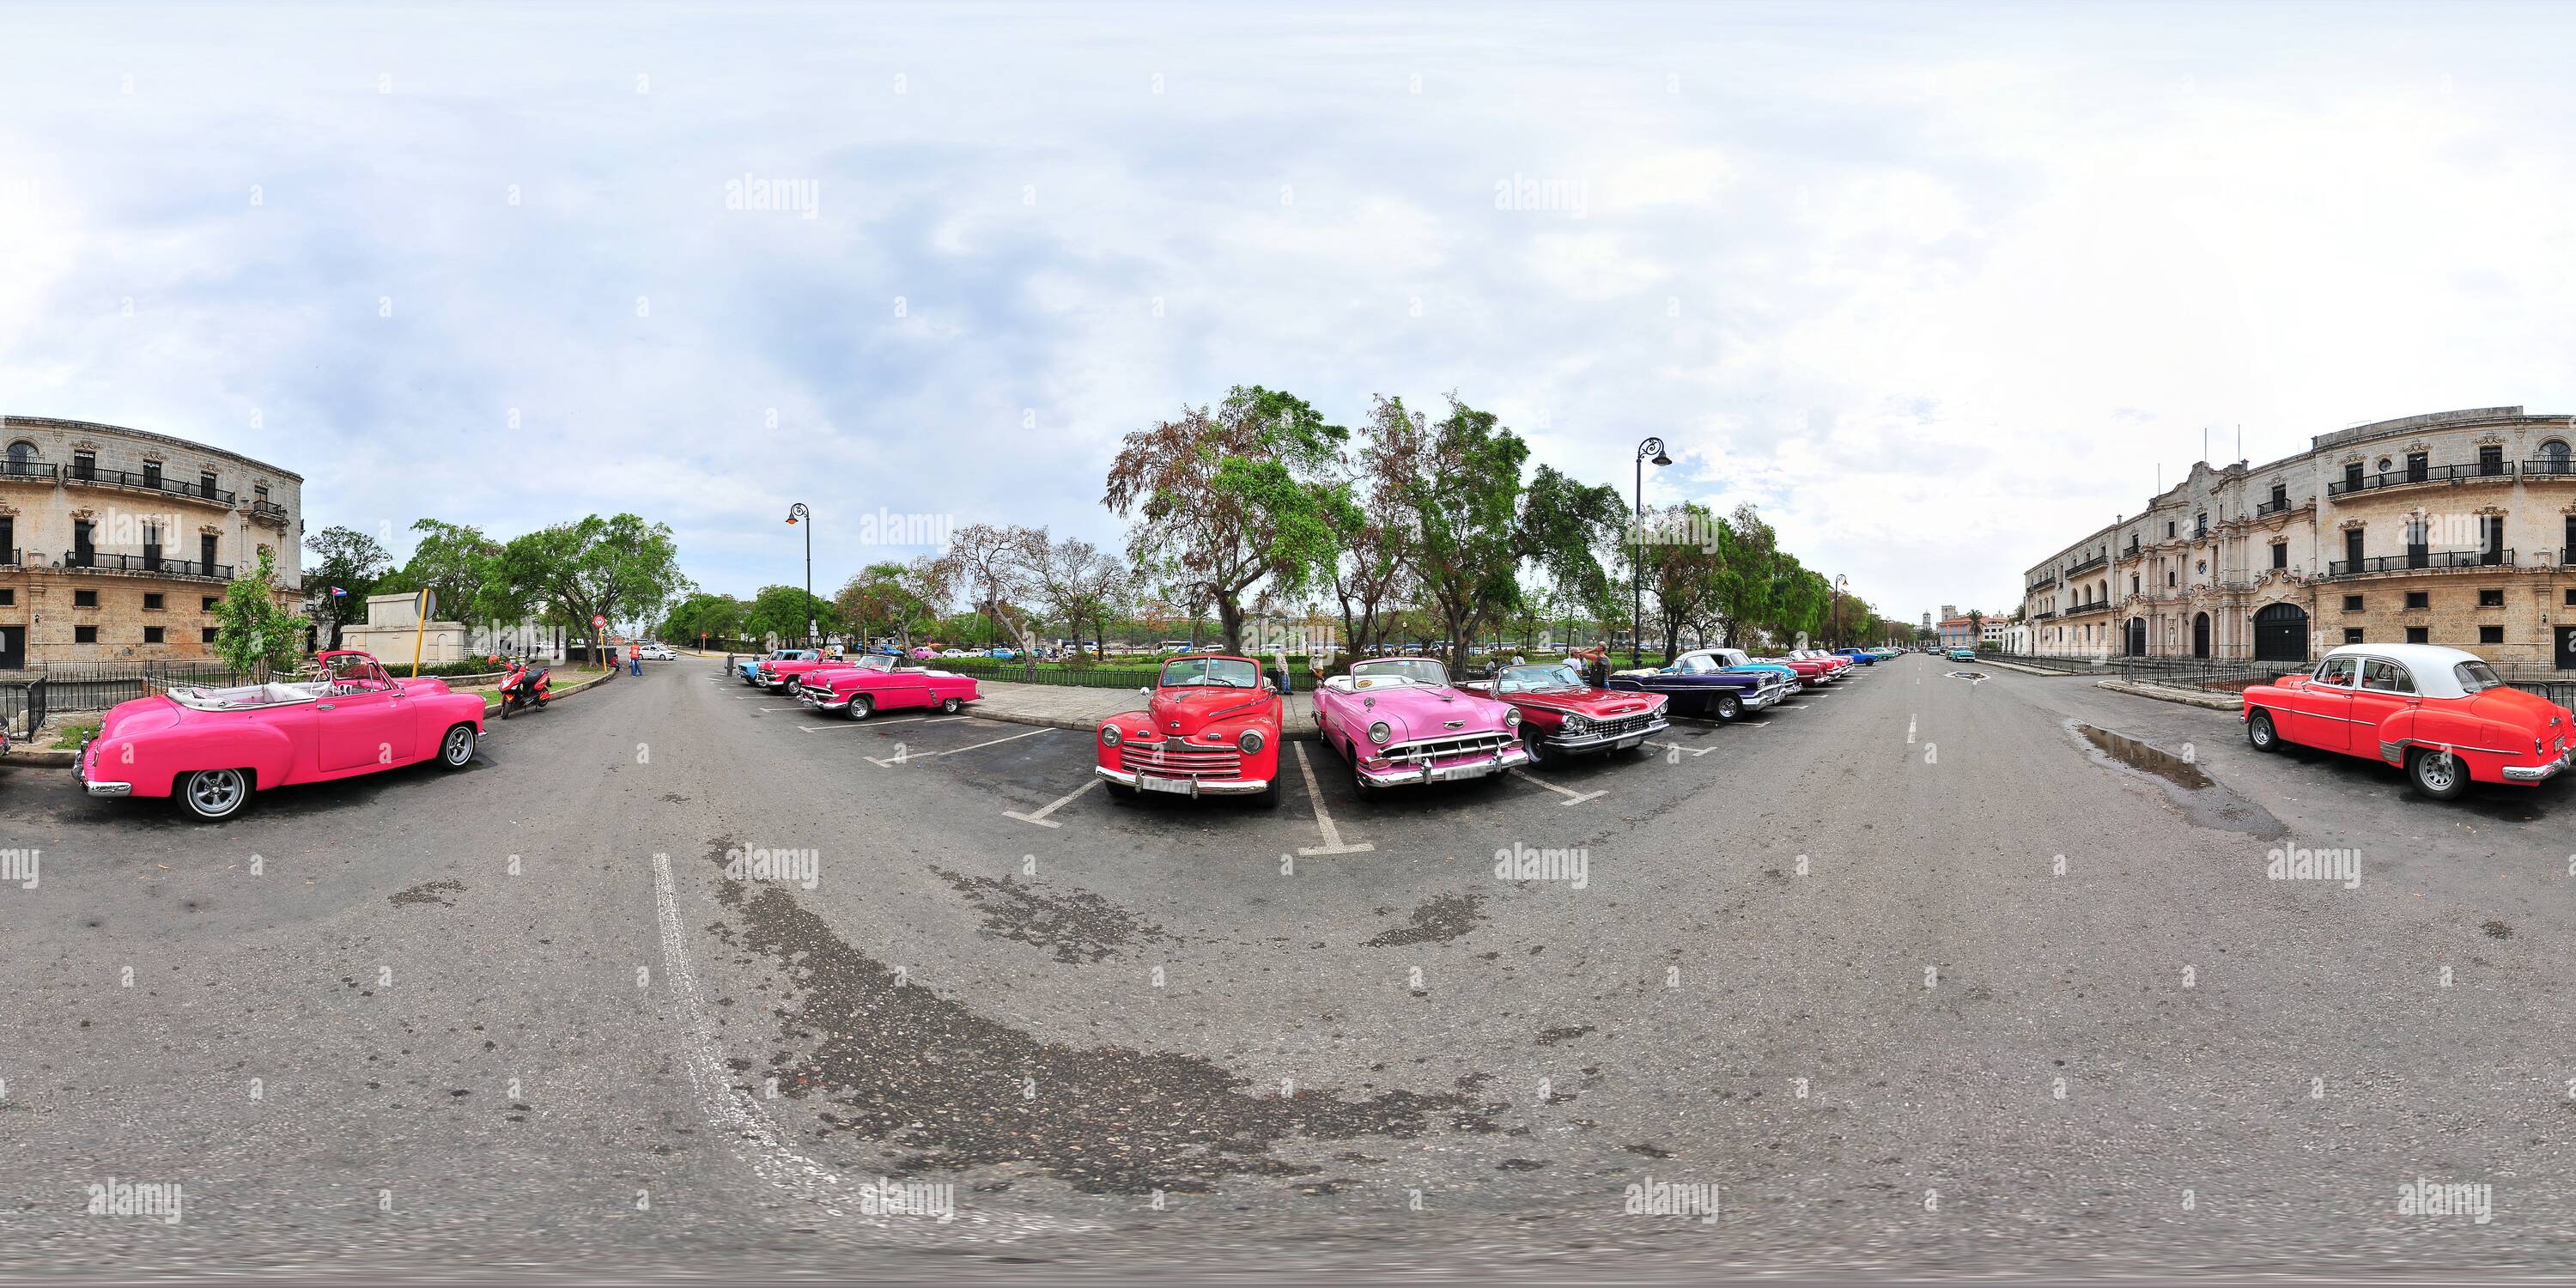 360 degree panoramic view of Cuba - Havanna, Oldtimer Cars at Cuba Tacon